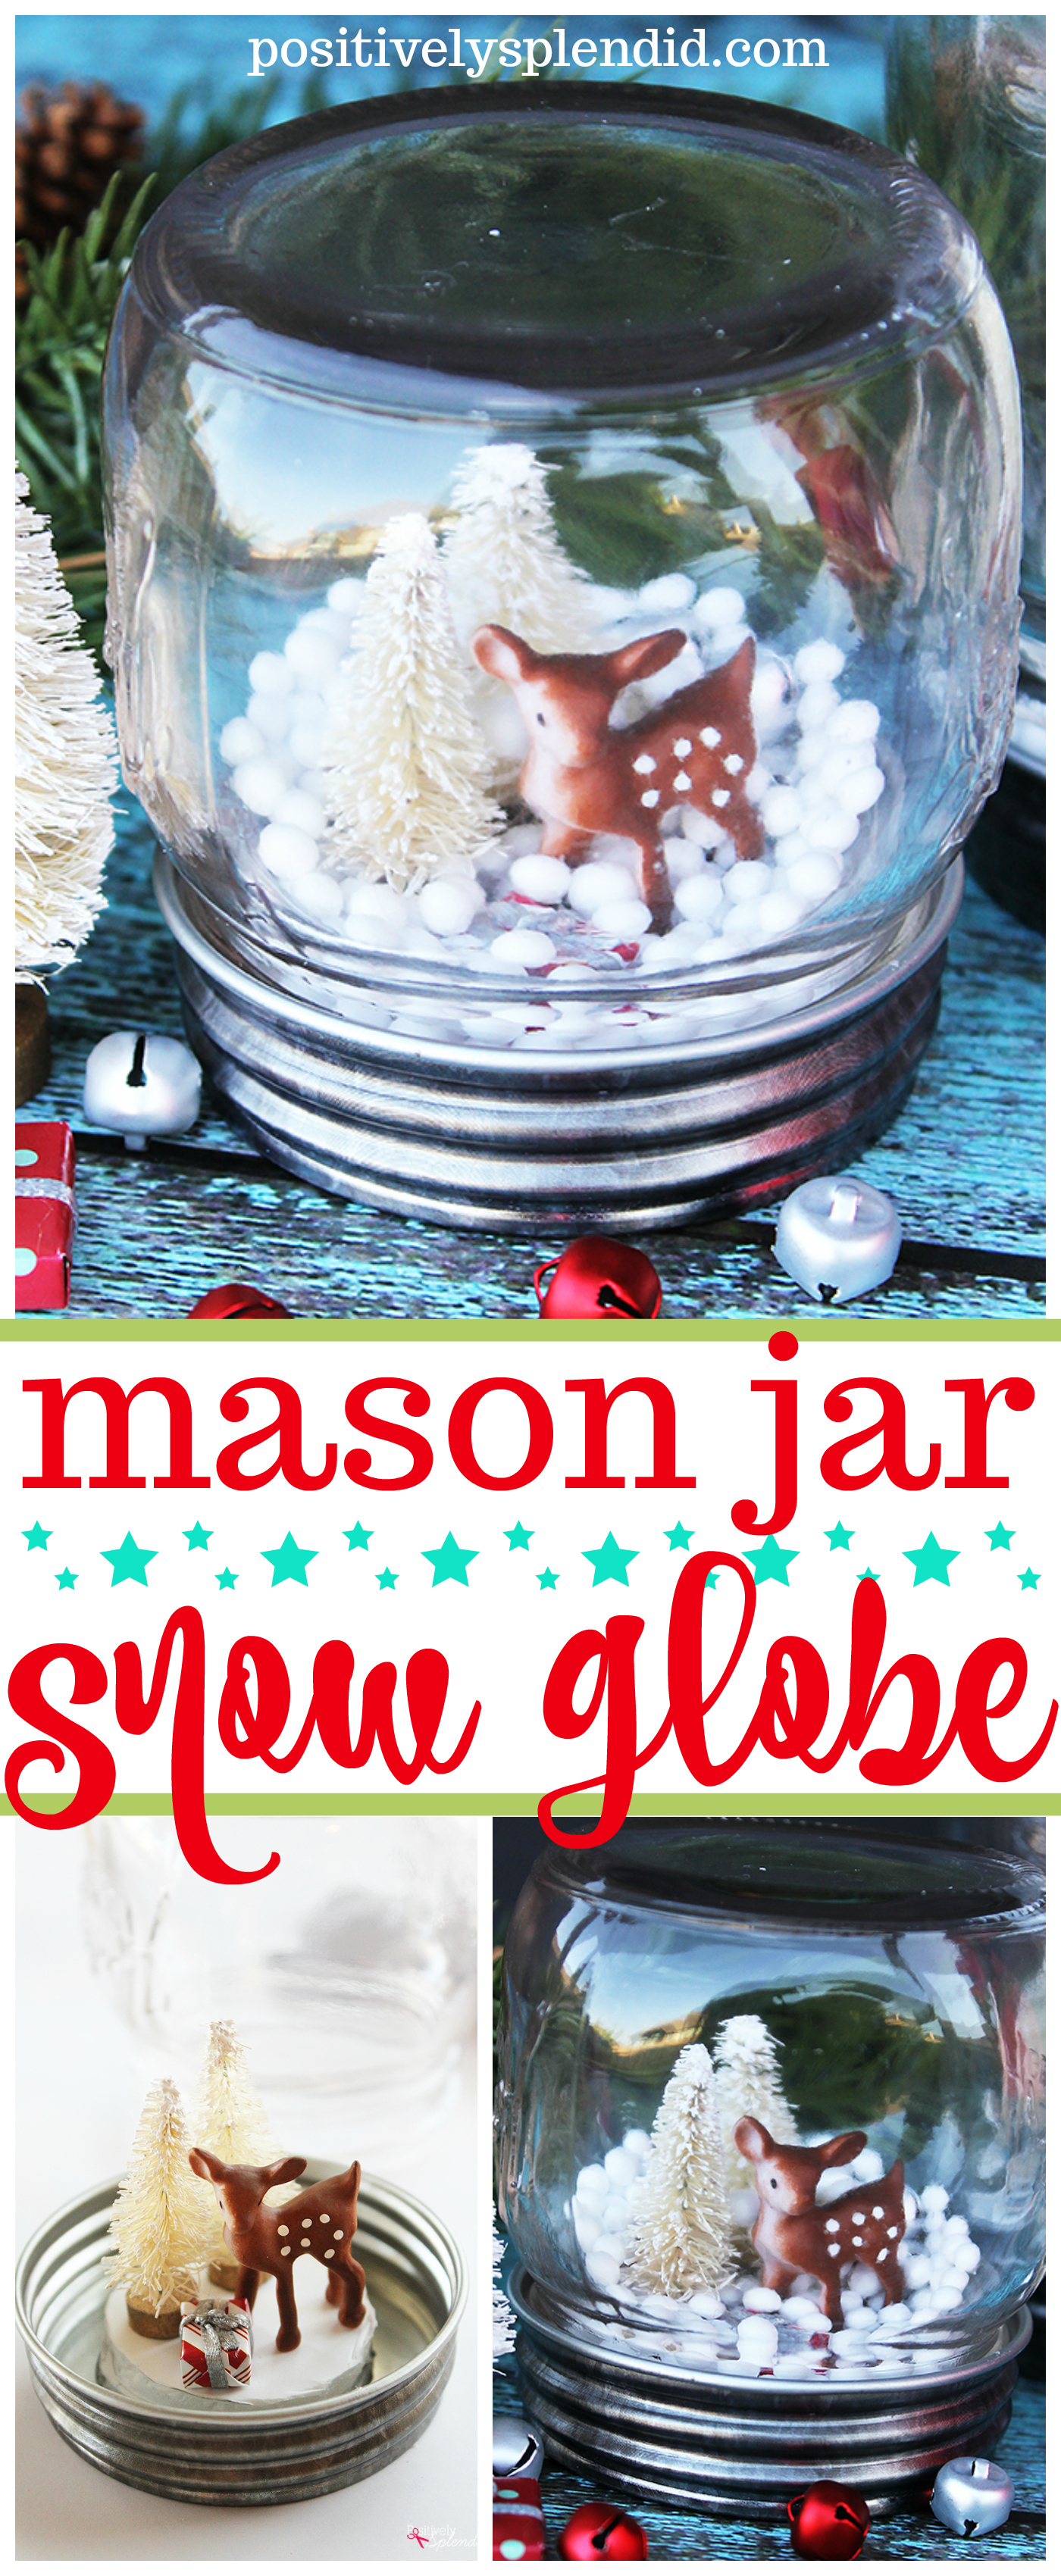 How to make a DIY Mason jar snow globe.